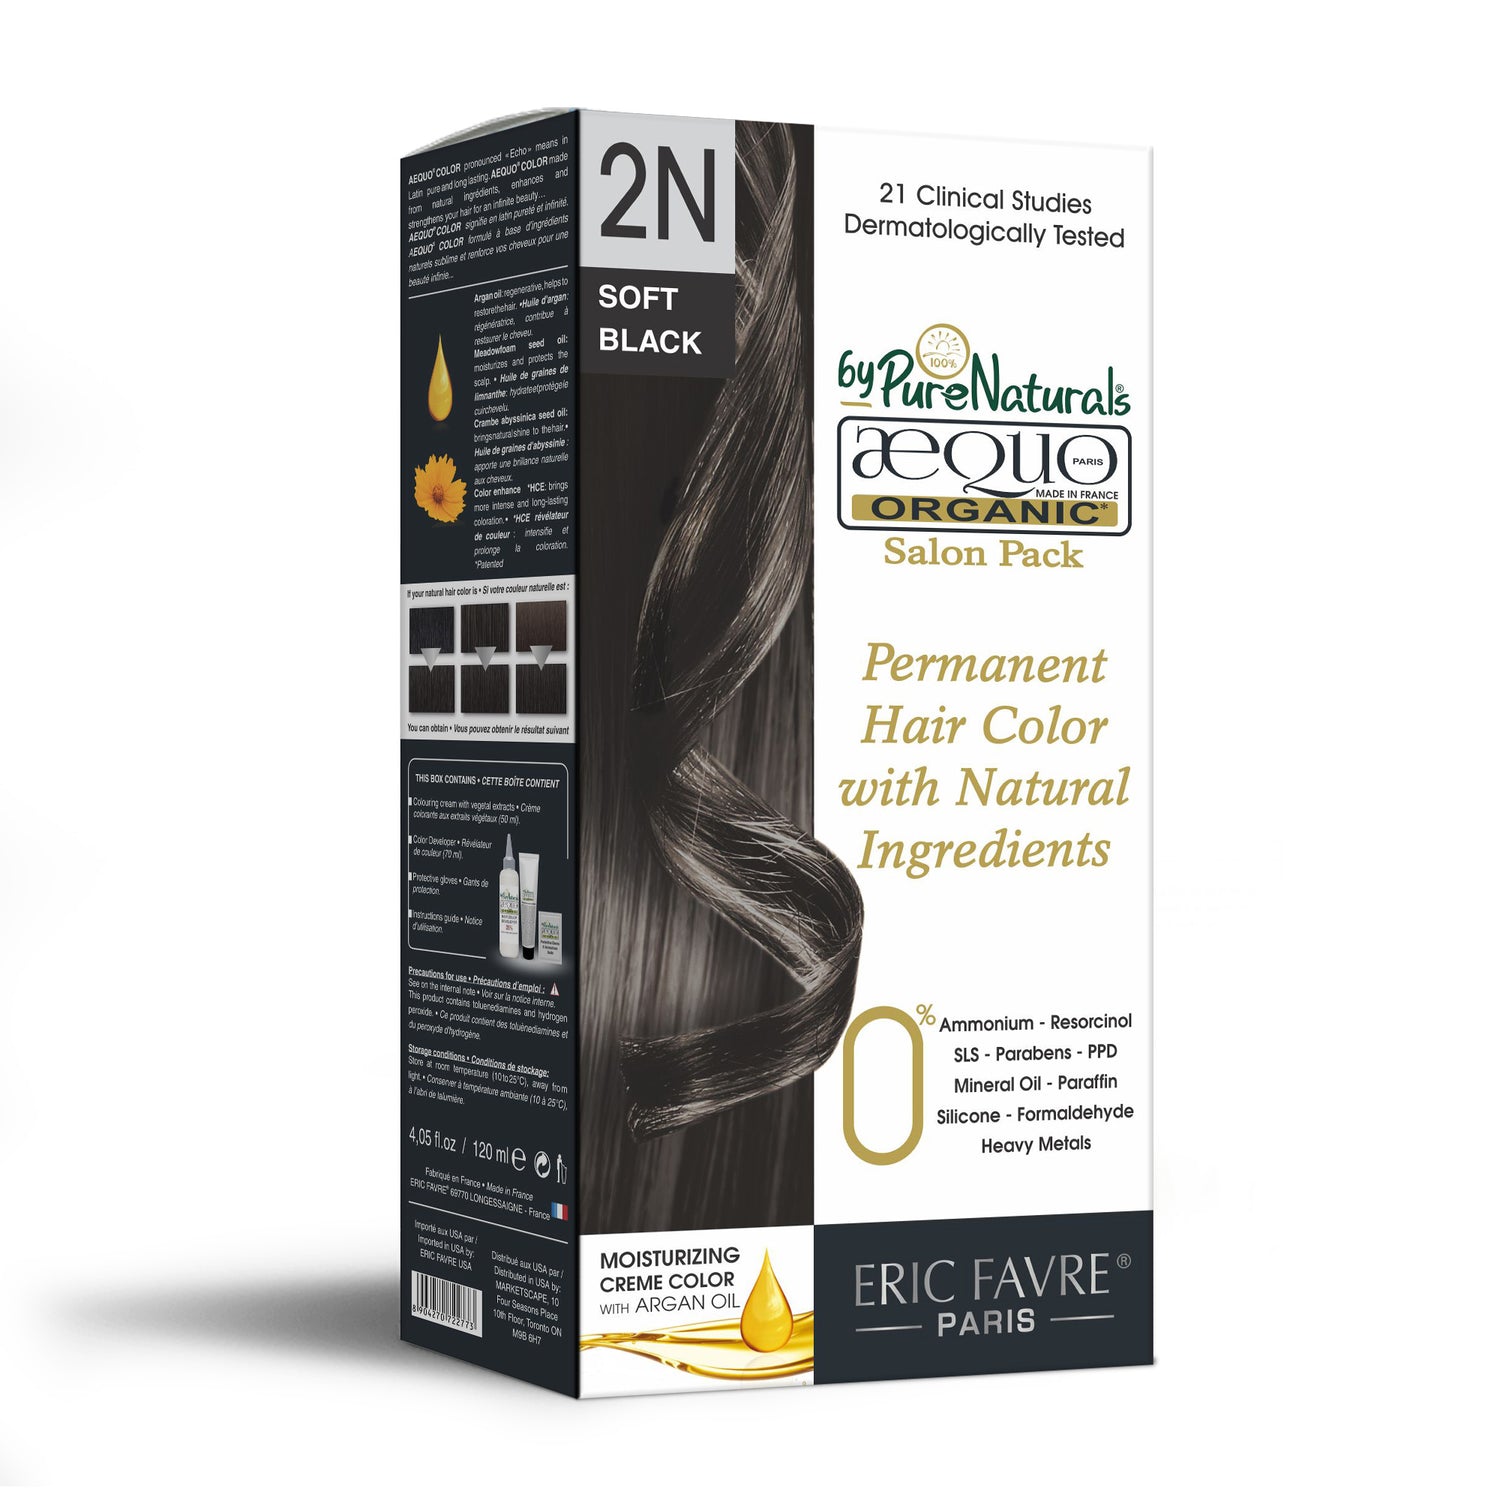 Aequo Organic Cream Hair Color Salon Pack blackish brown